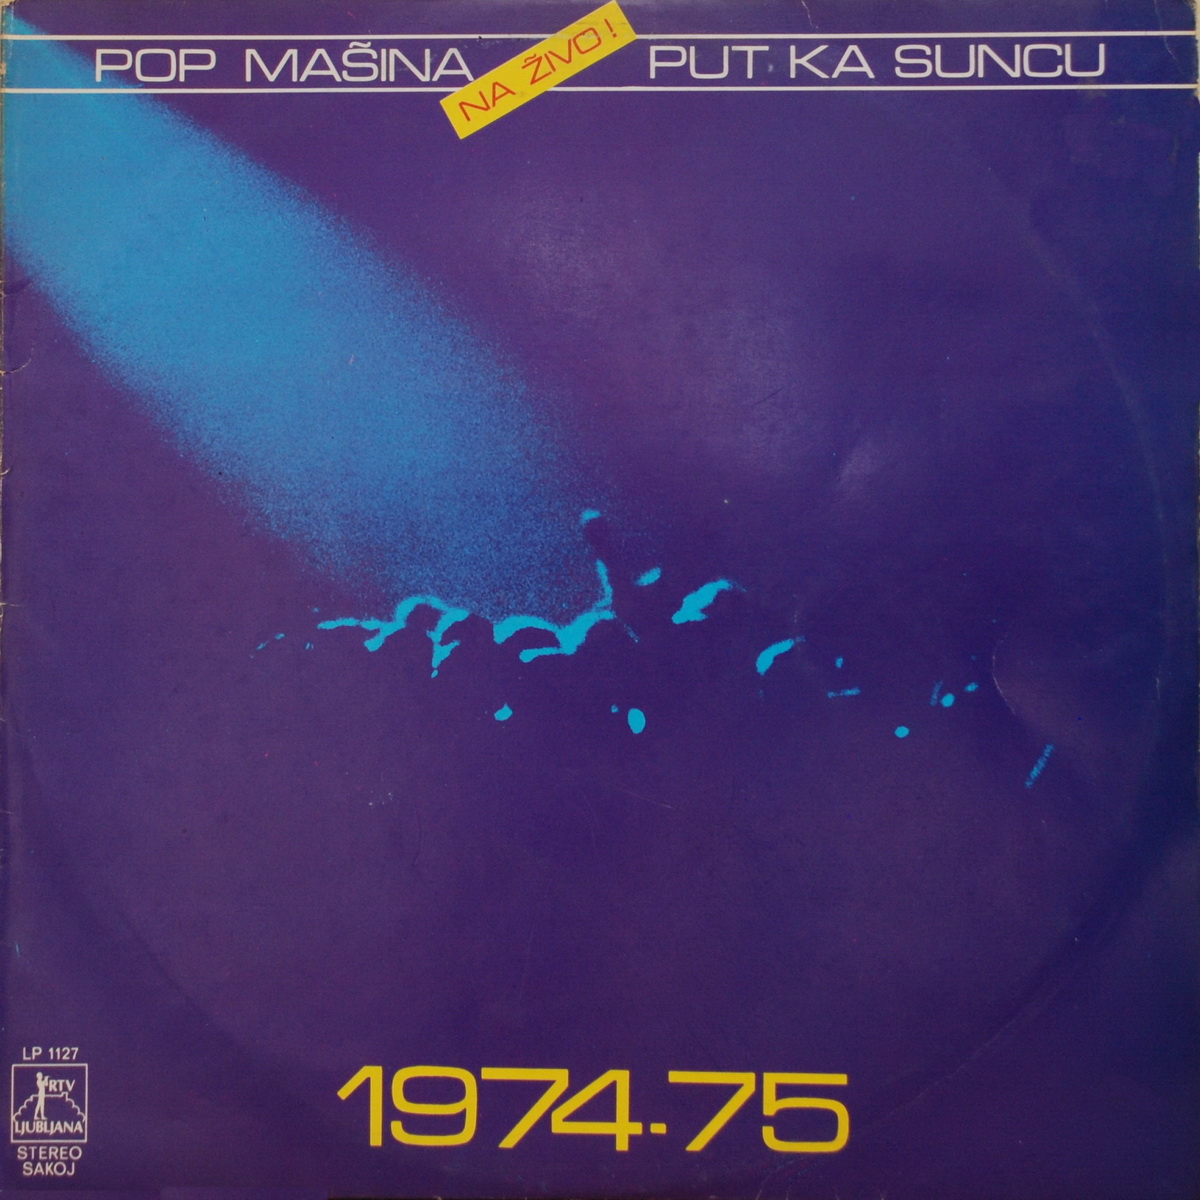 Pop Masina 1976 Put ka suncu Na zivo a